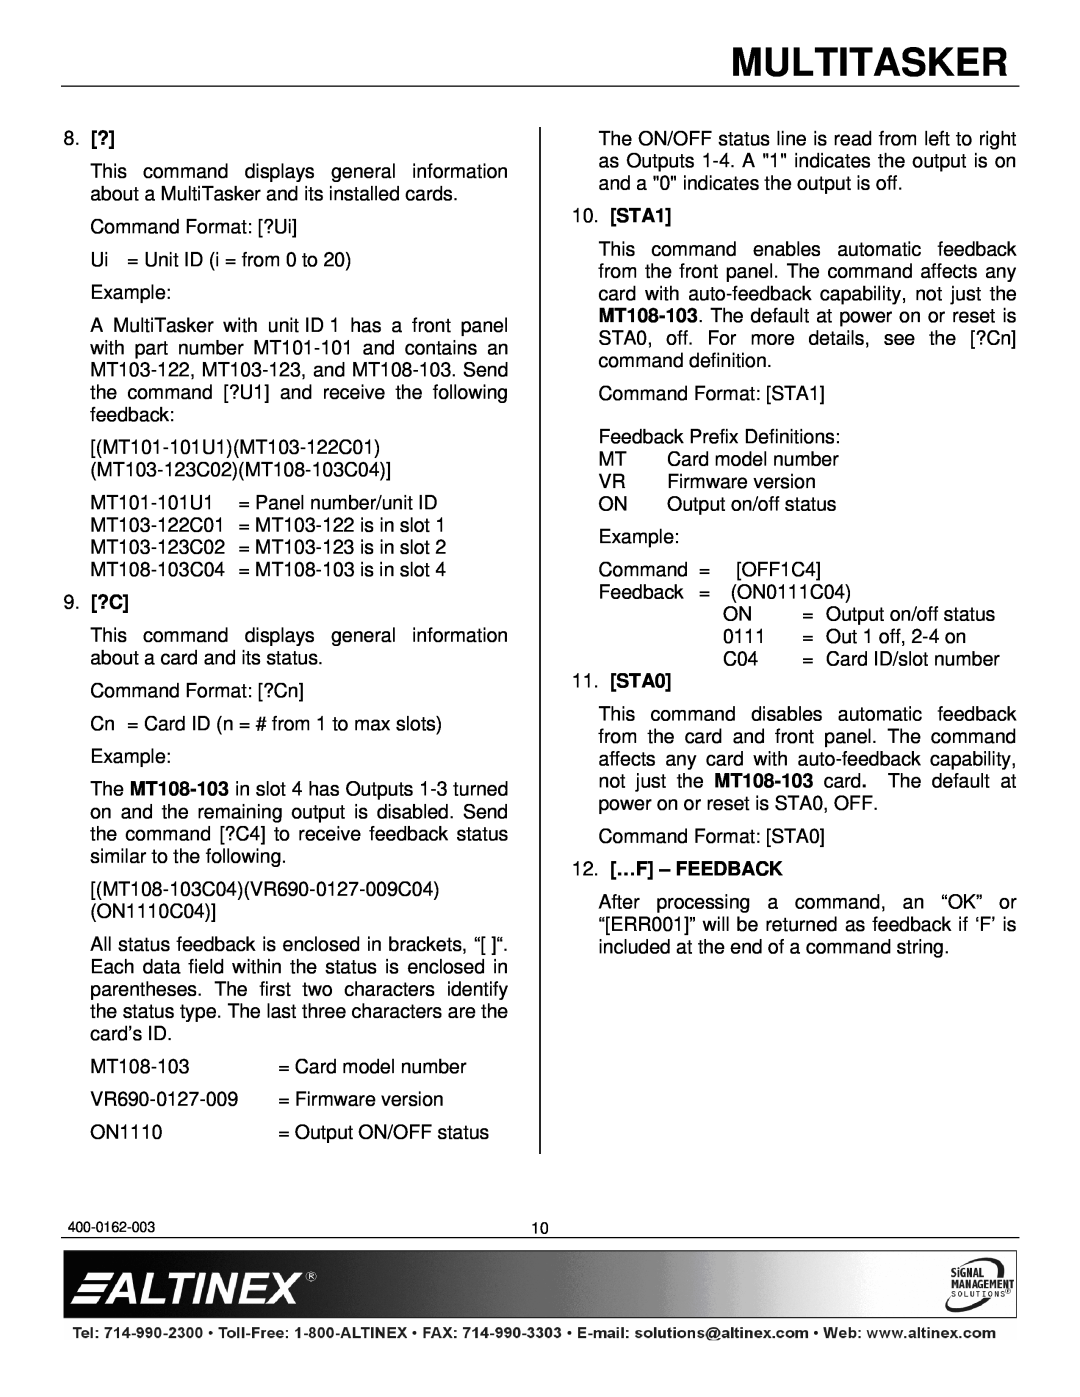 Altinex MT108-103 manual Multitasker, 9.?C, 10.STA1, 11.STA0, 12.…F - FEEDBACK 